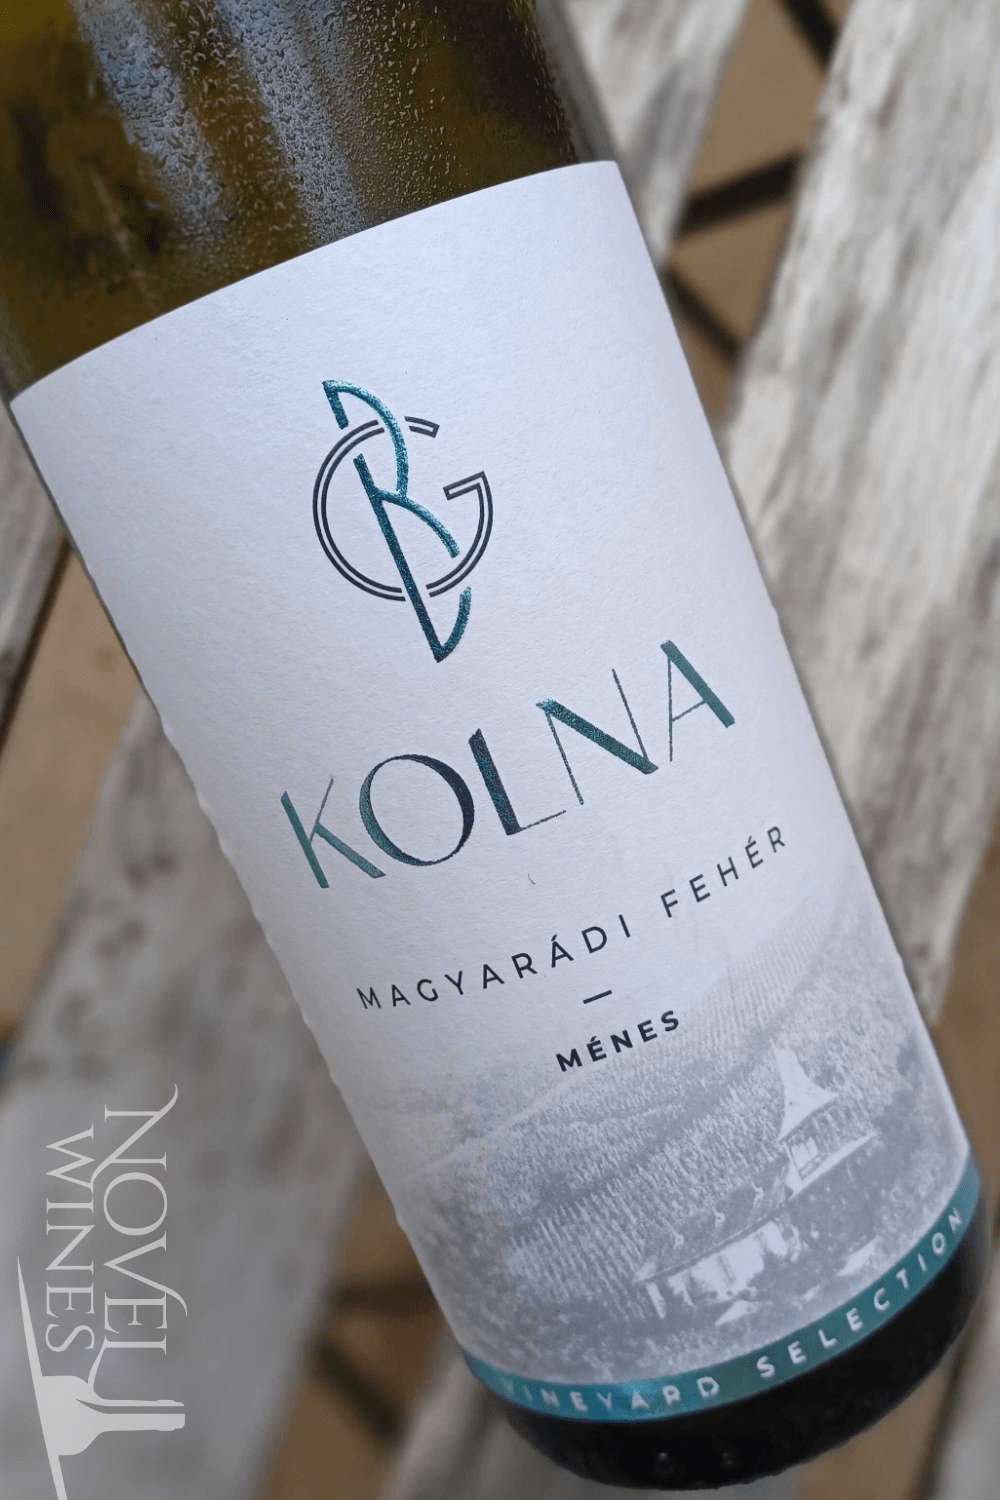 Balla Geza White Wine Copy of Balla Geza Kolna Kiralyleanyka 2020, Romania